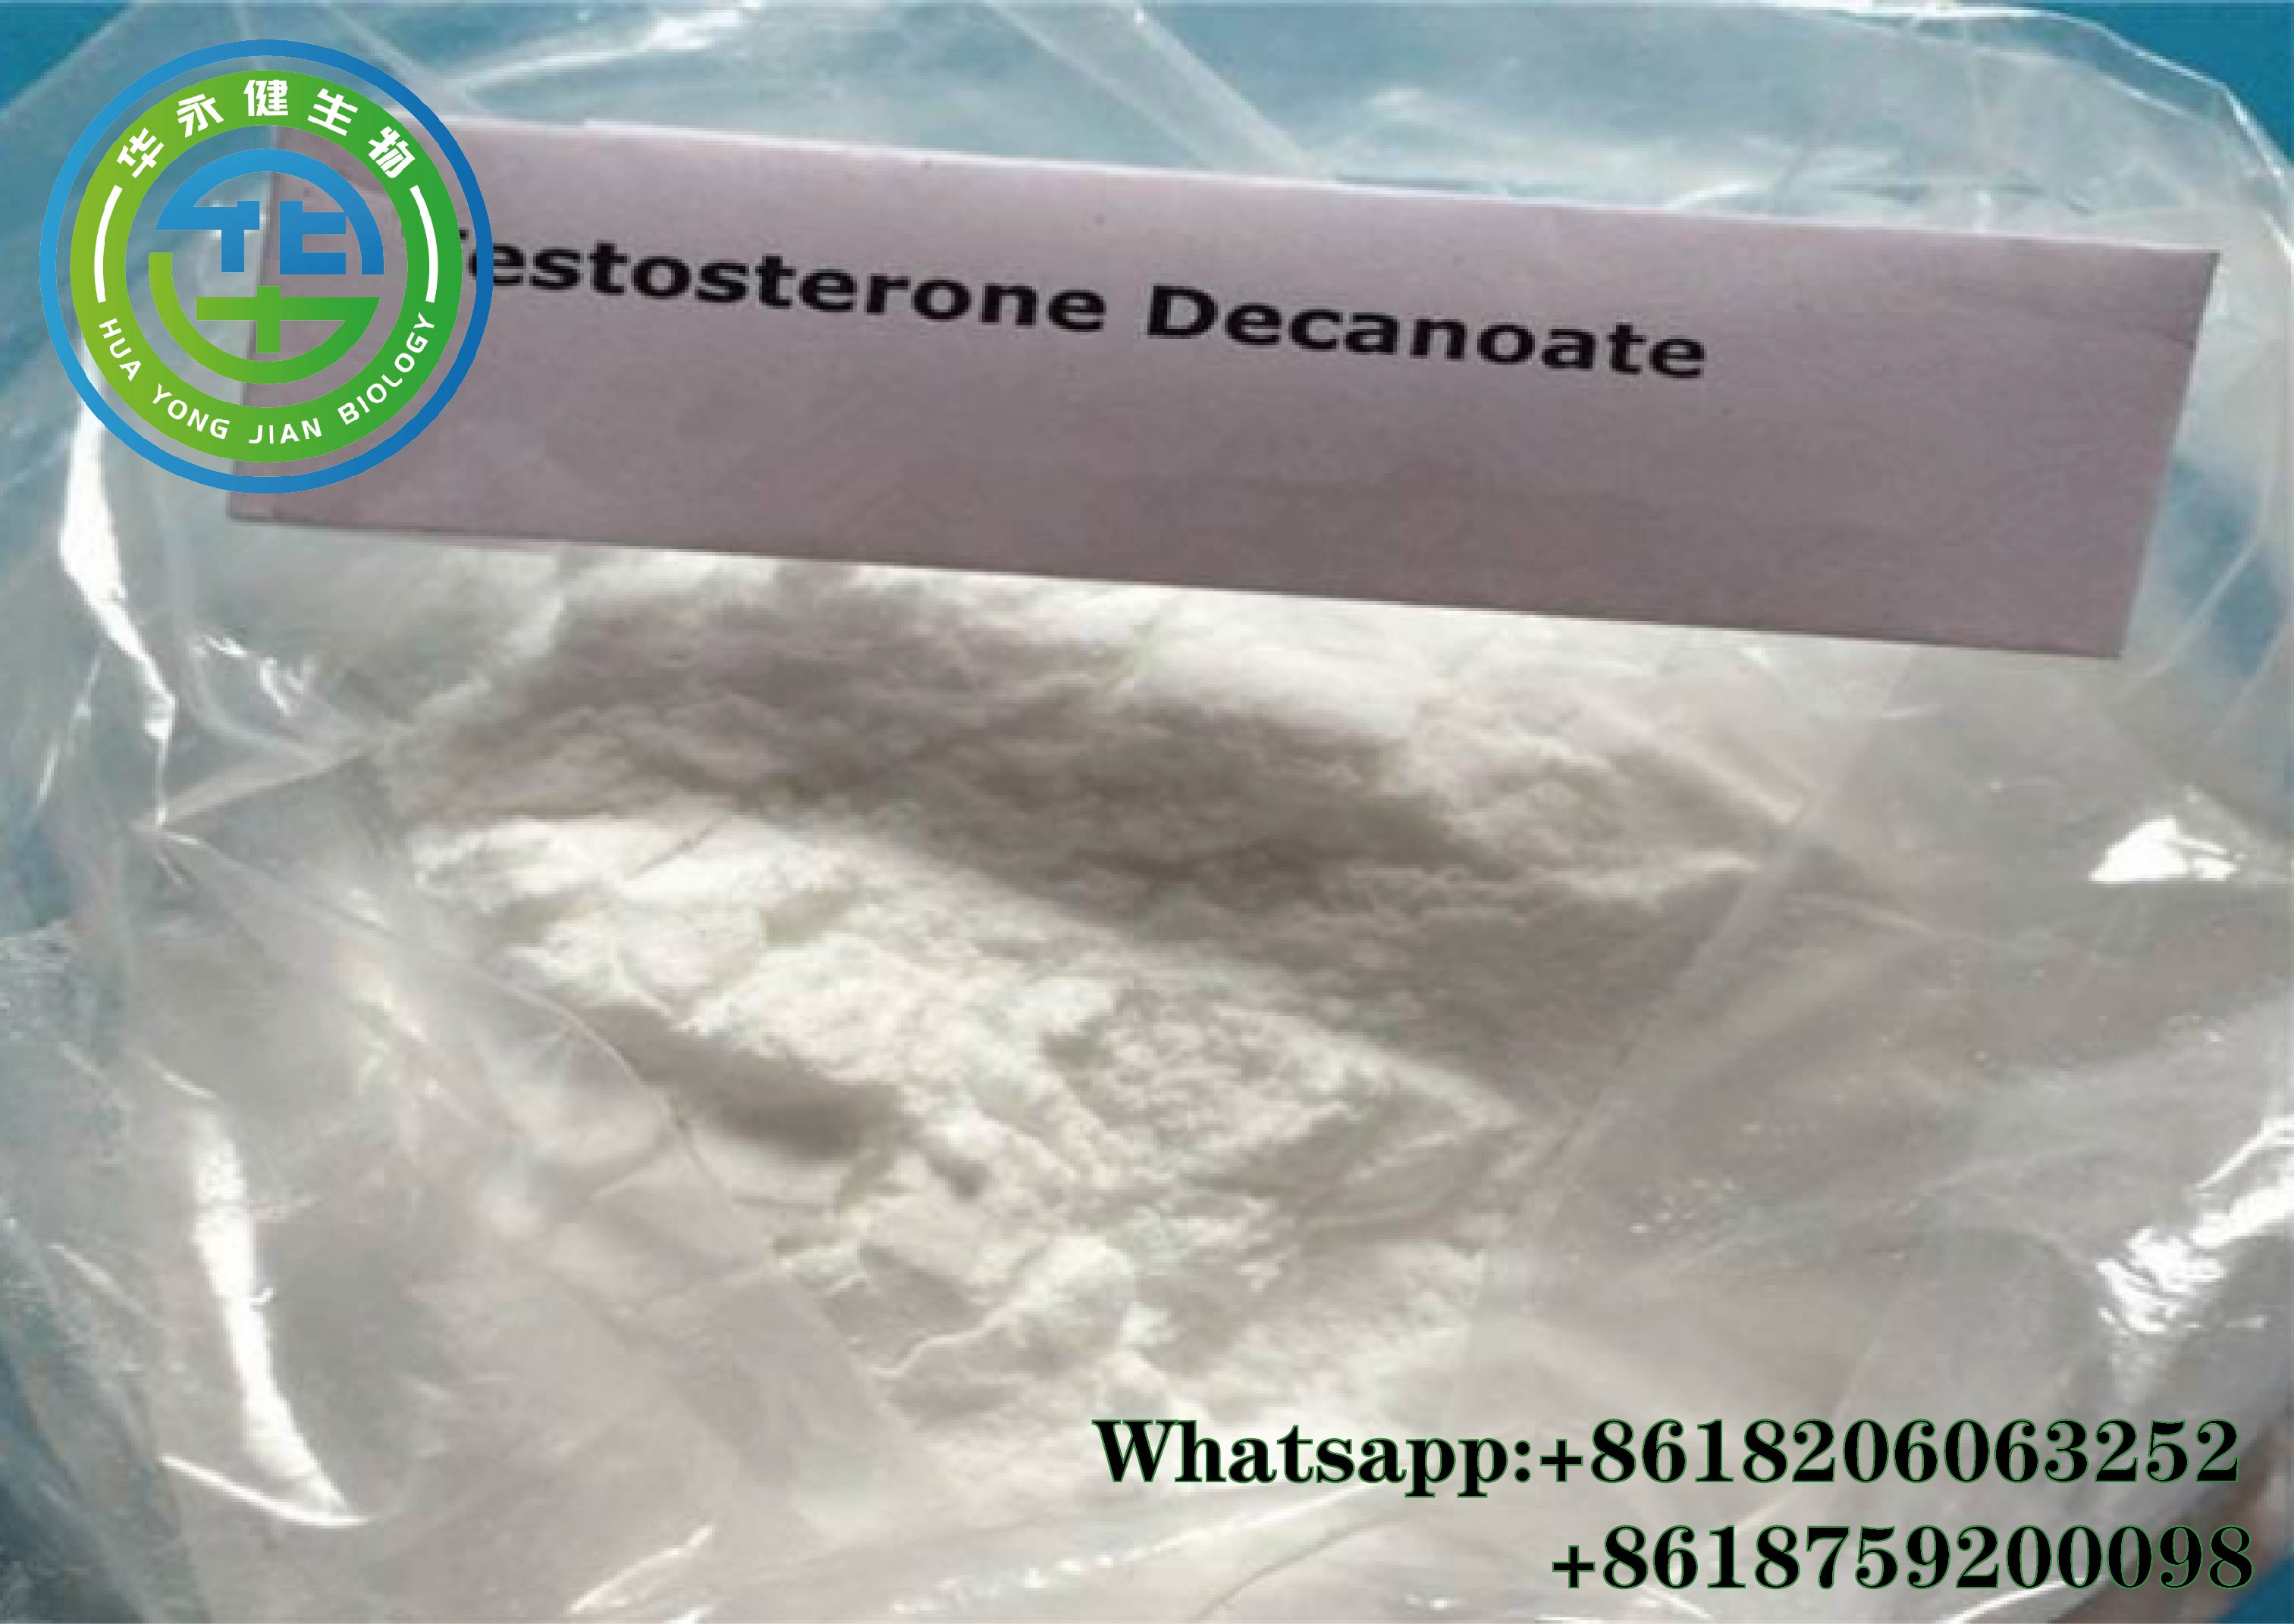 Testosterone Decanoate1